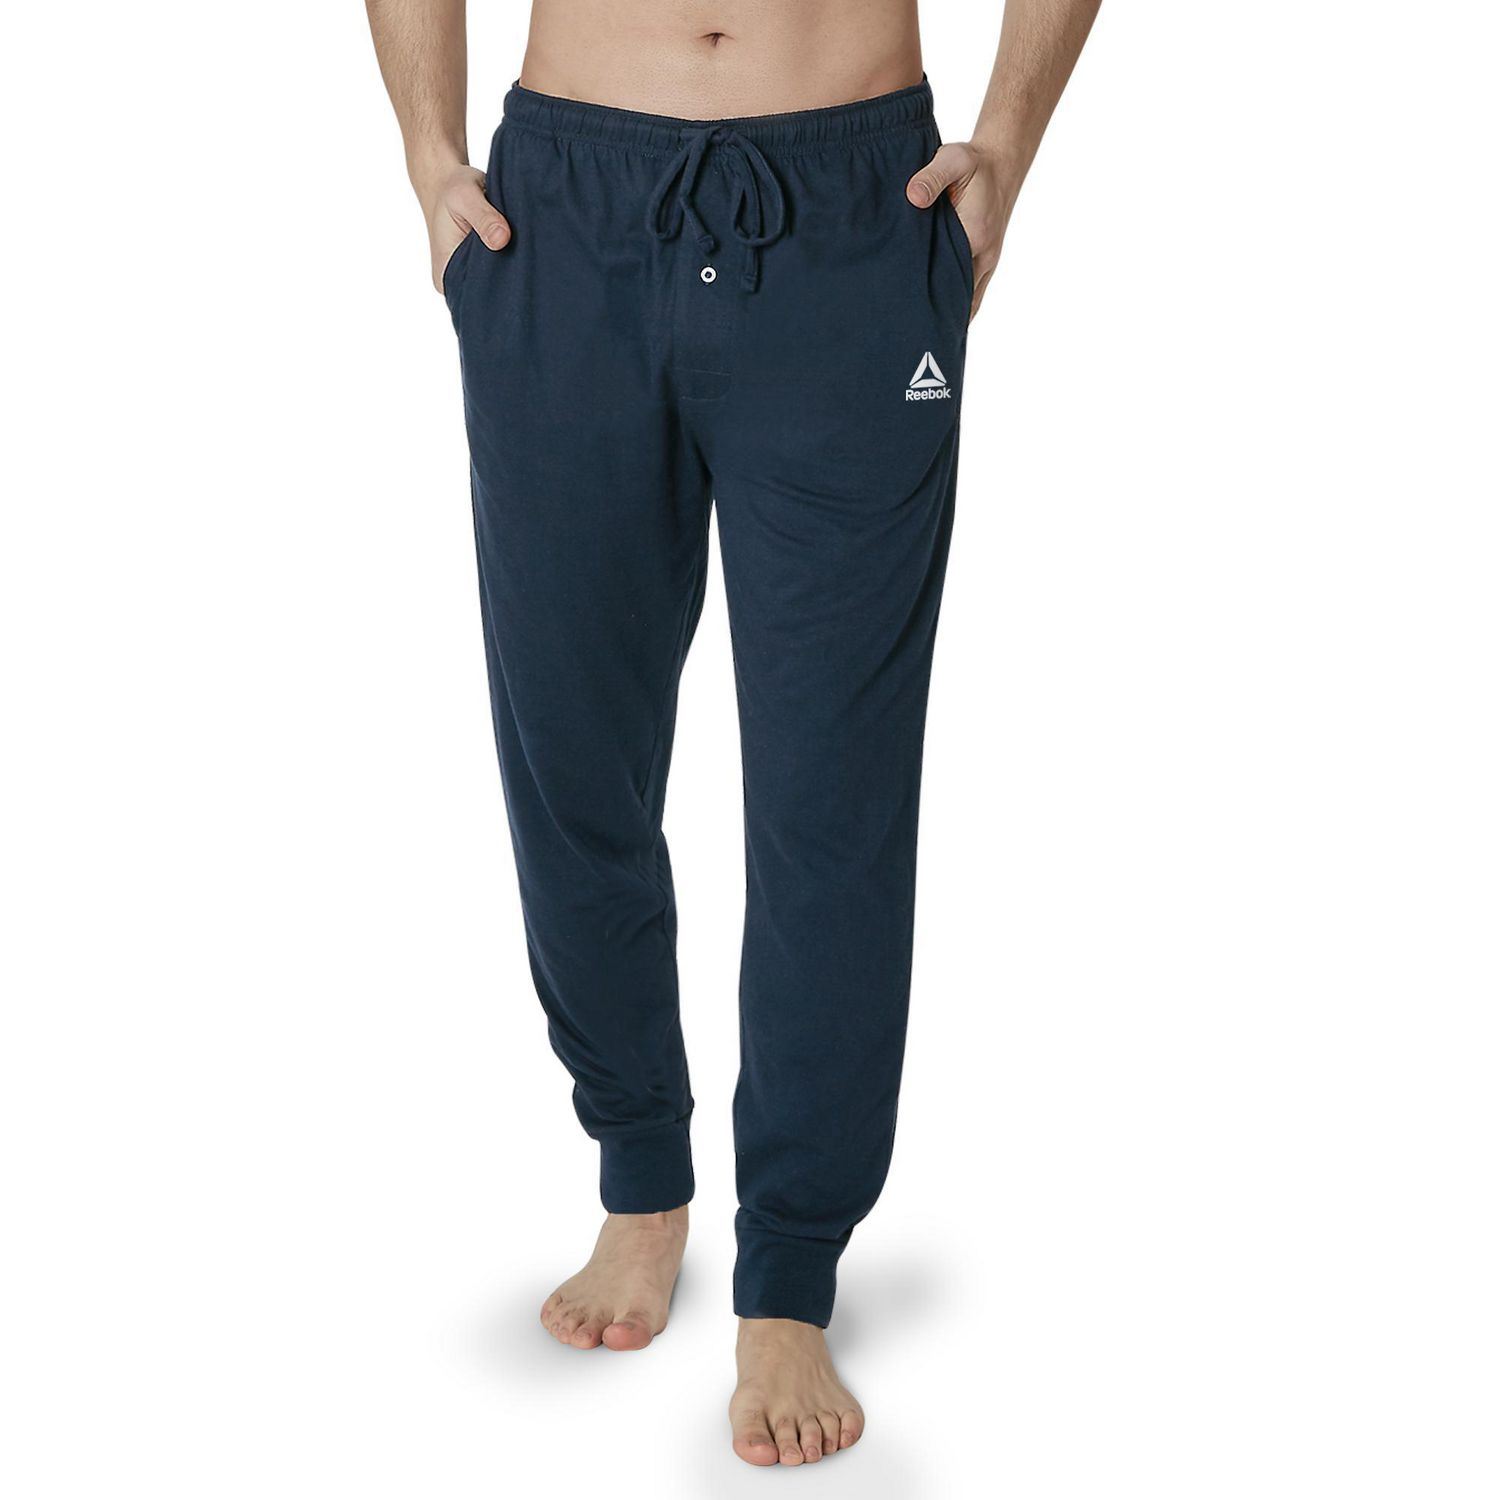 Reebok Men's Core Knit Jogger Loungewear Pants only $14.99 shipped (Reg.  $45!)